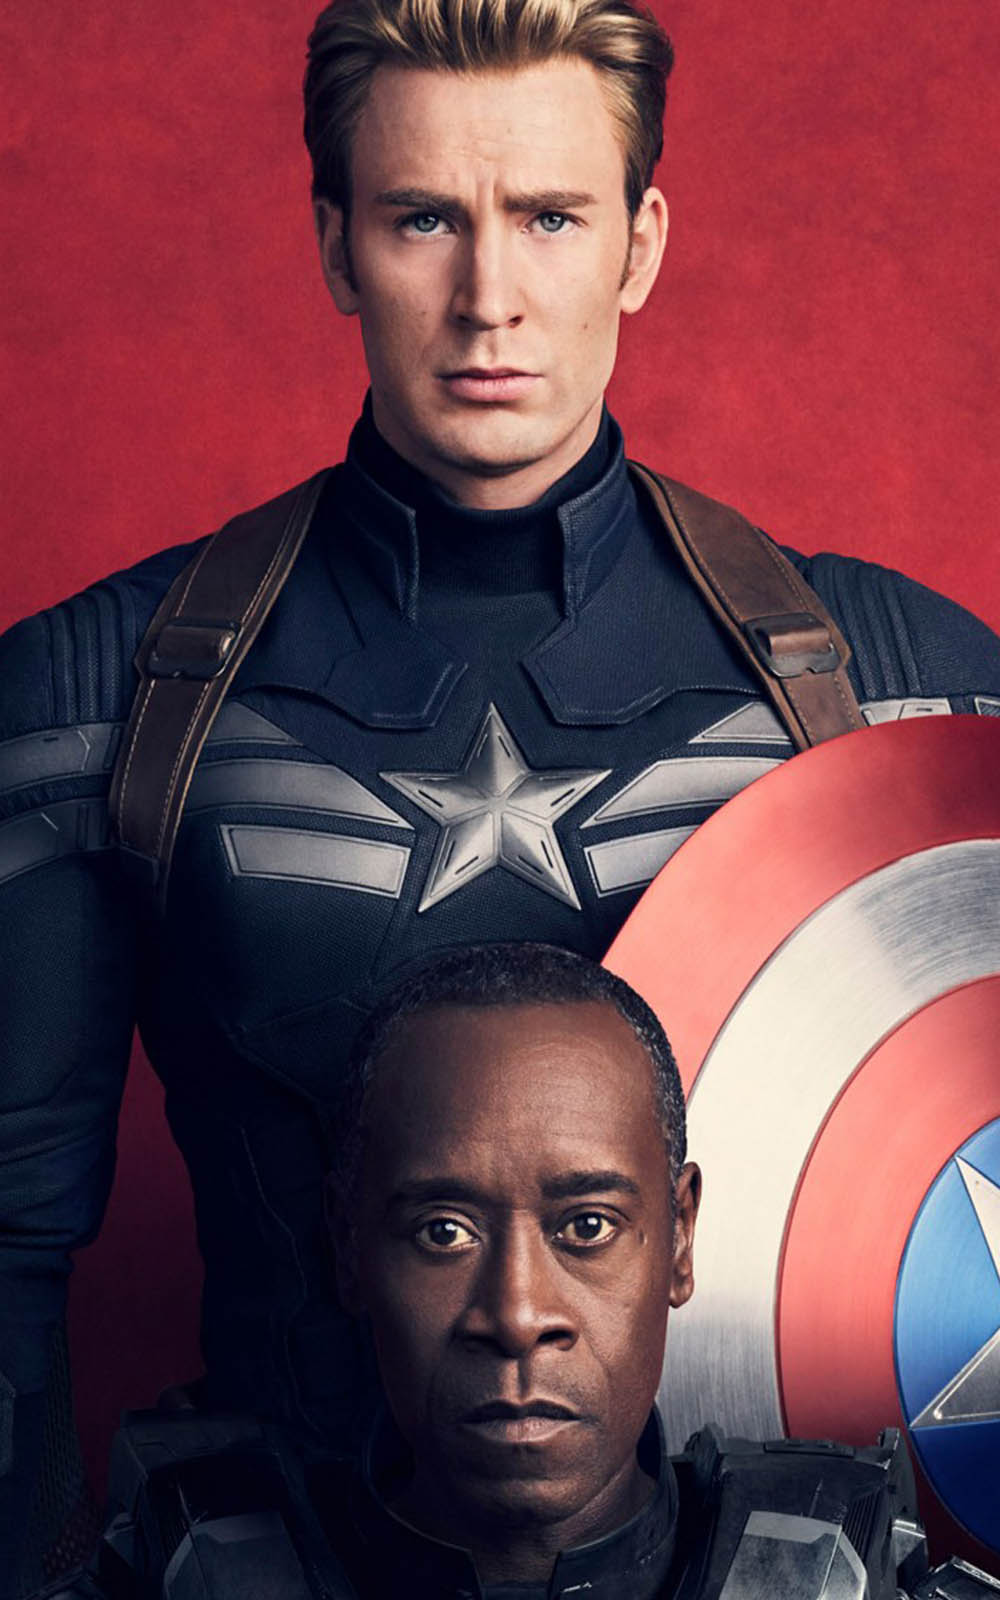 Captain America In Avengers Infinity War 4K Ultra HD Mobile Wallpaper